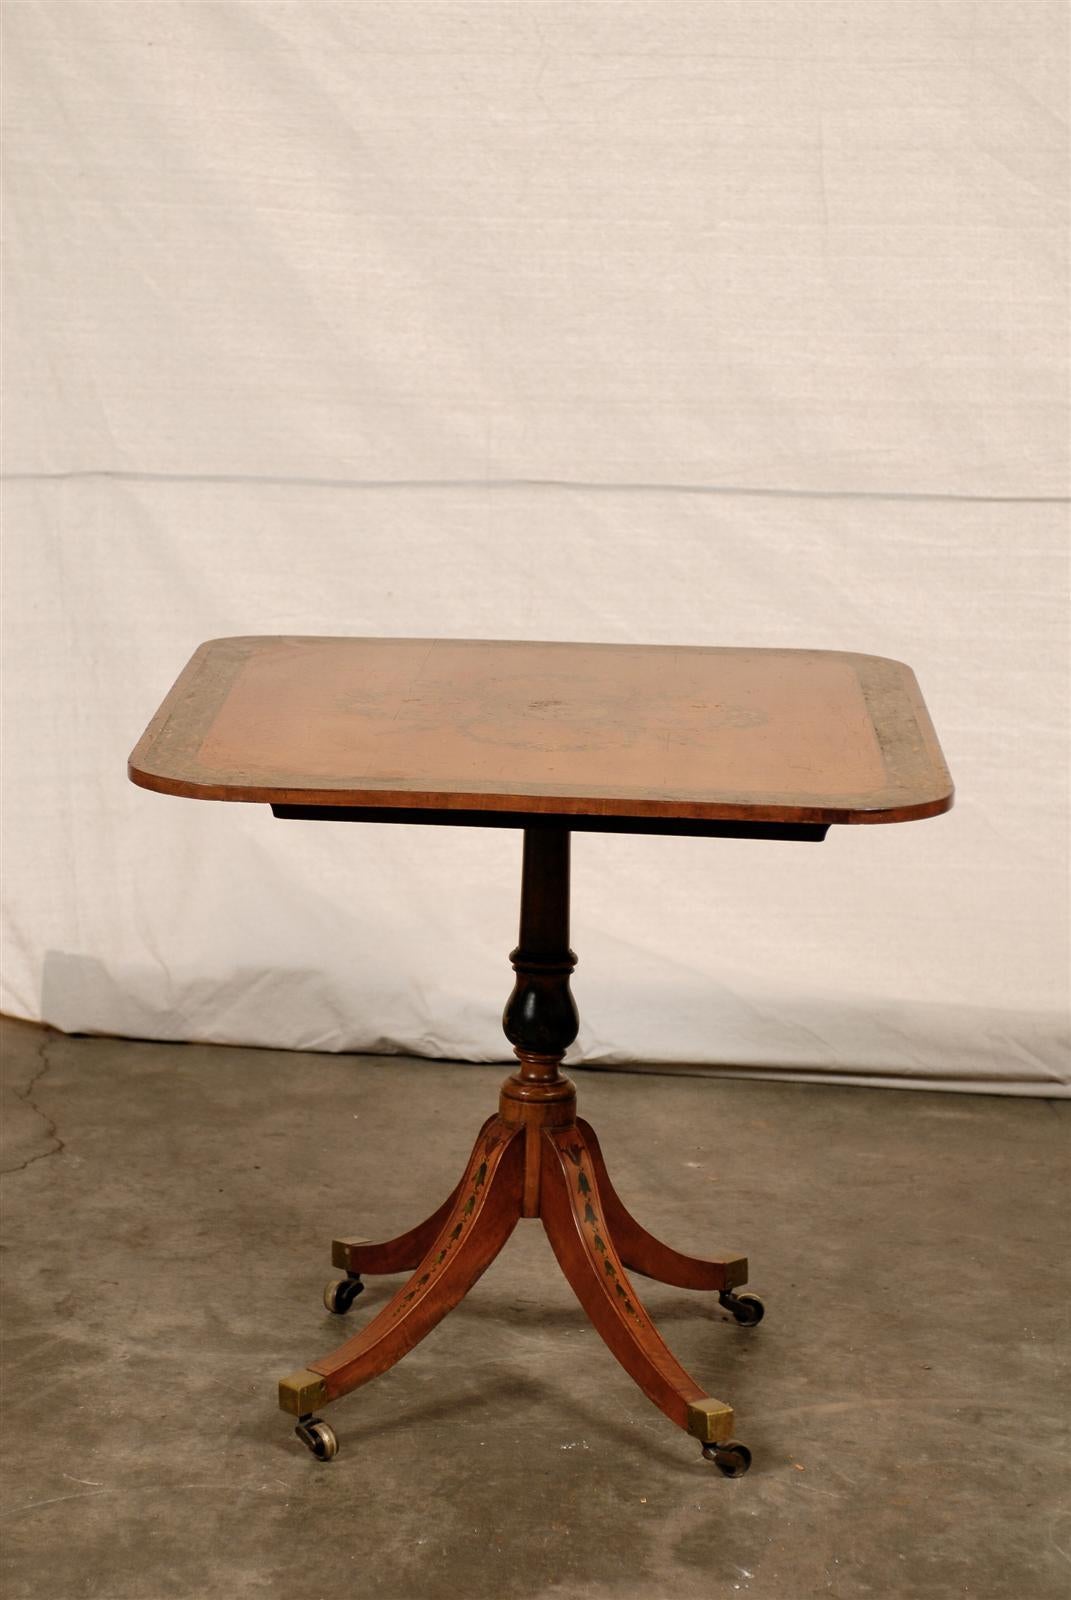 19th-20th century English tilt-top breakfast table.